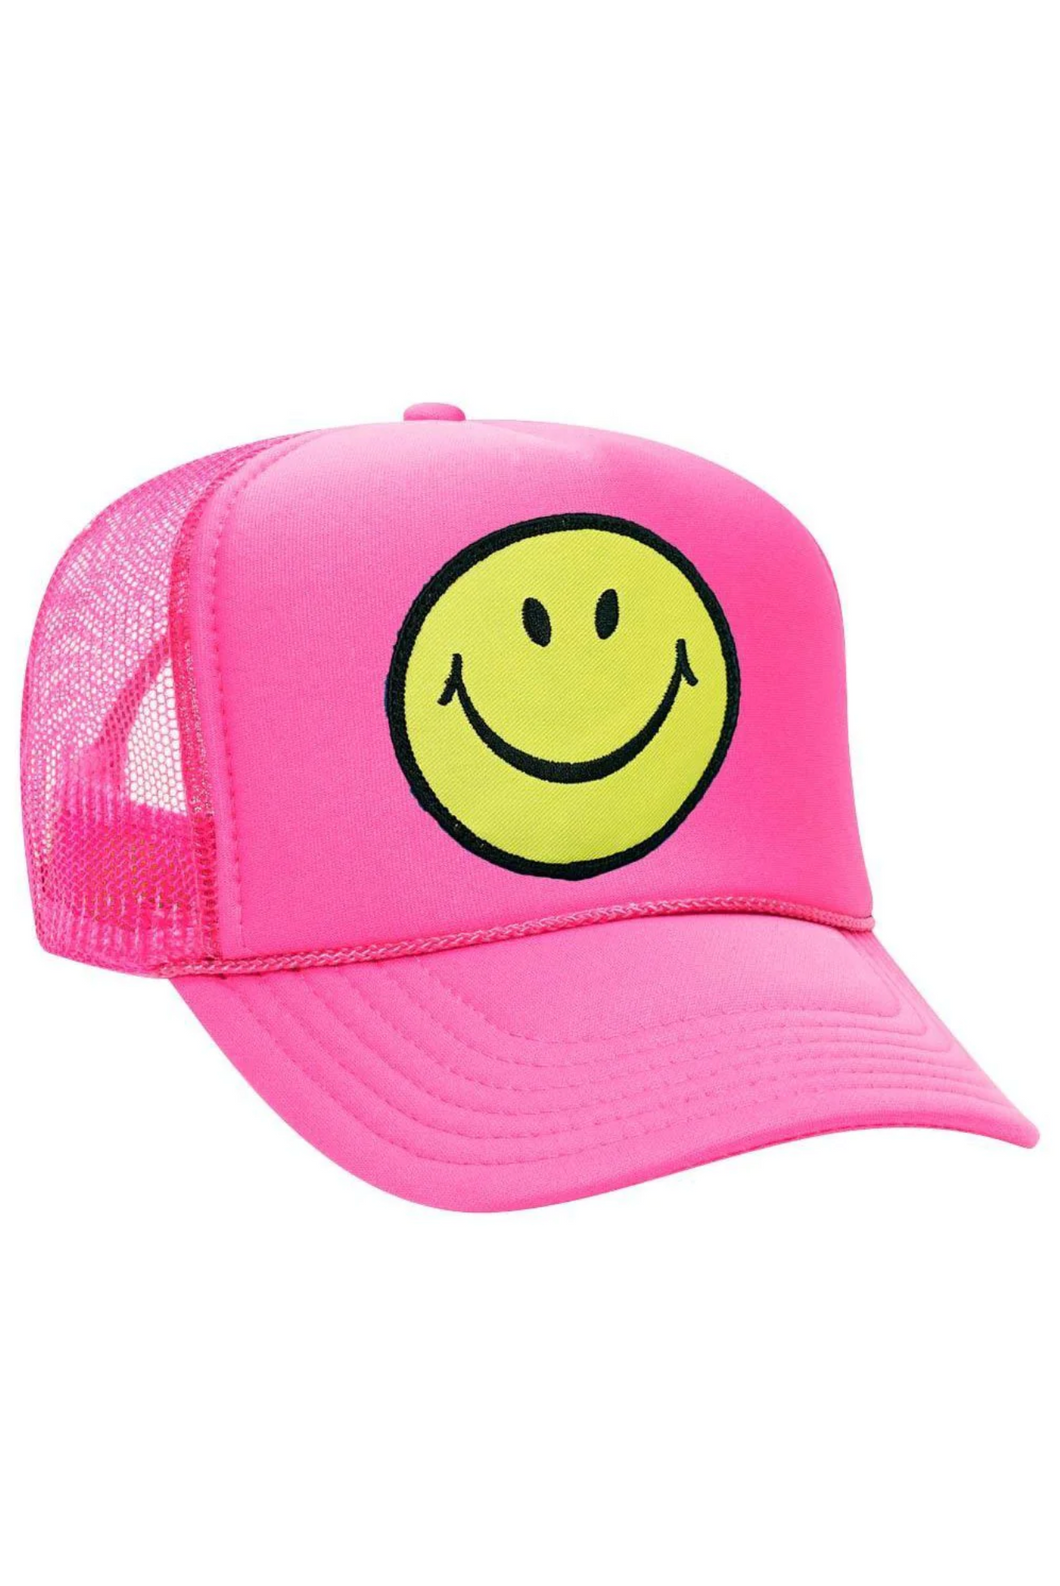 Aviator Nation Smiley Vintage Trucker Hat in Neon Pink